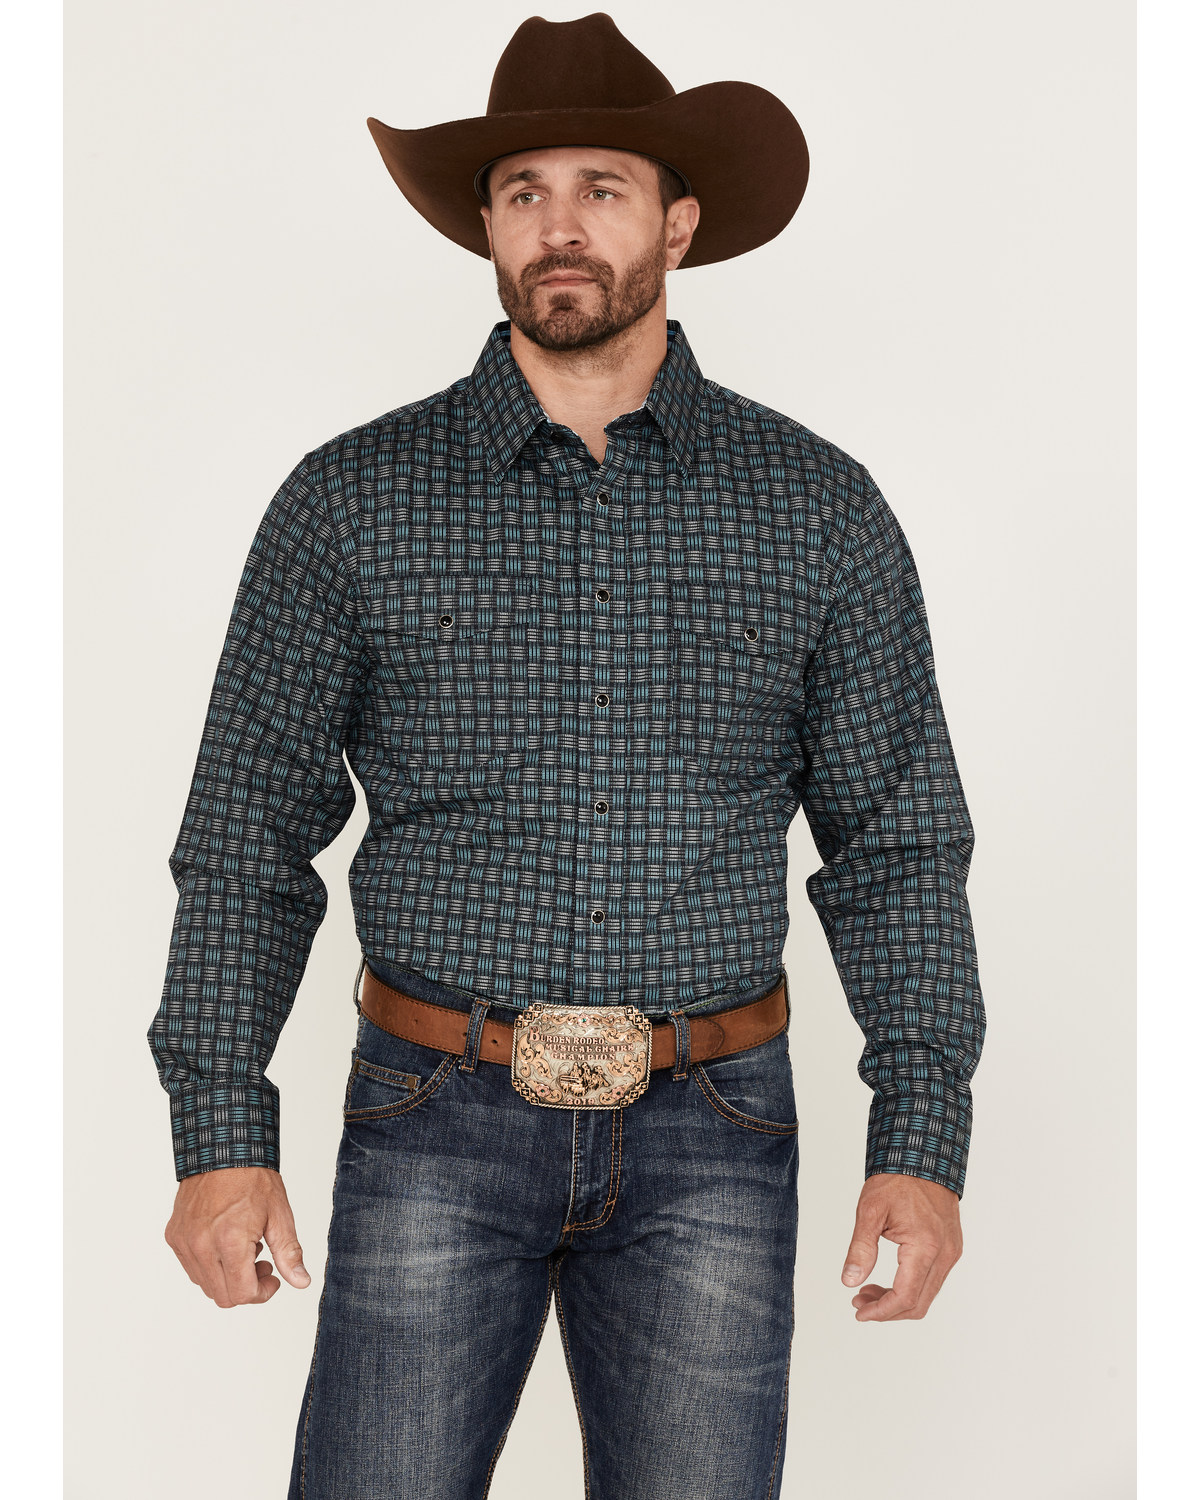 Panhandle Select Men's Digital Woven Print Long Sleeve Snap Western Shirt